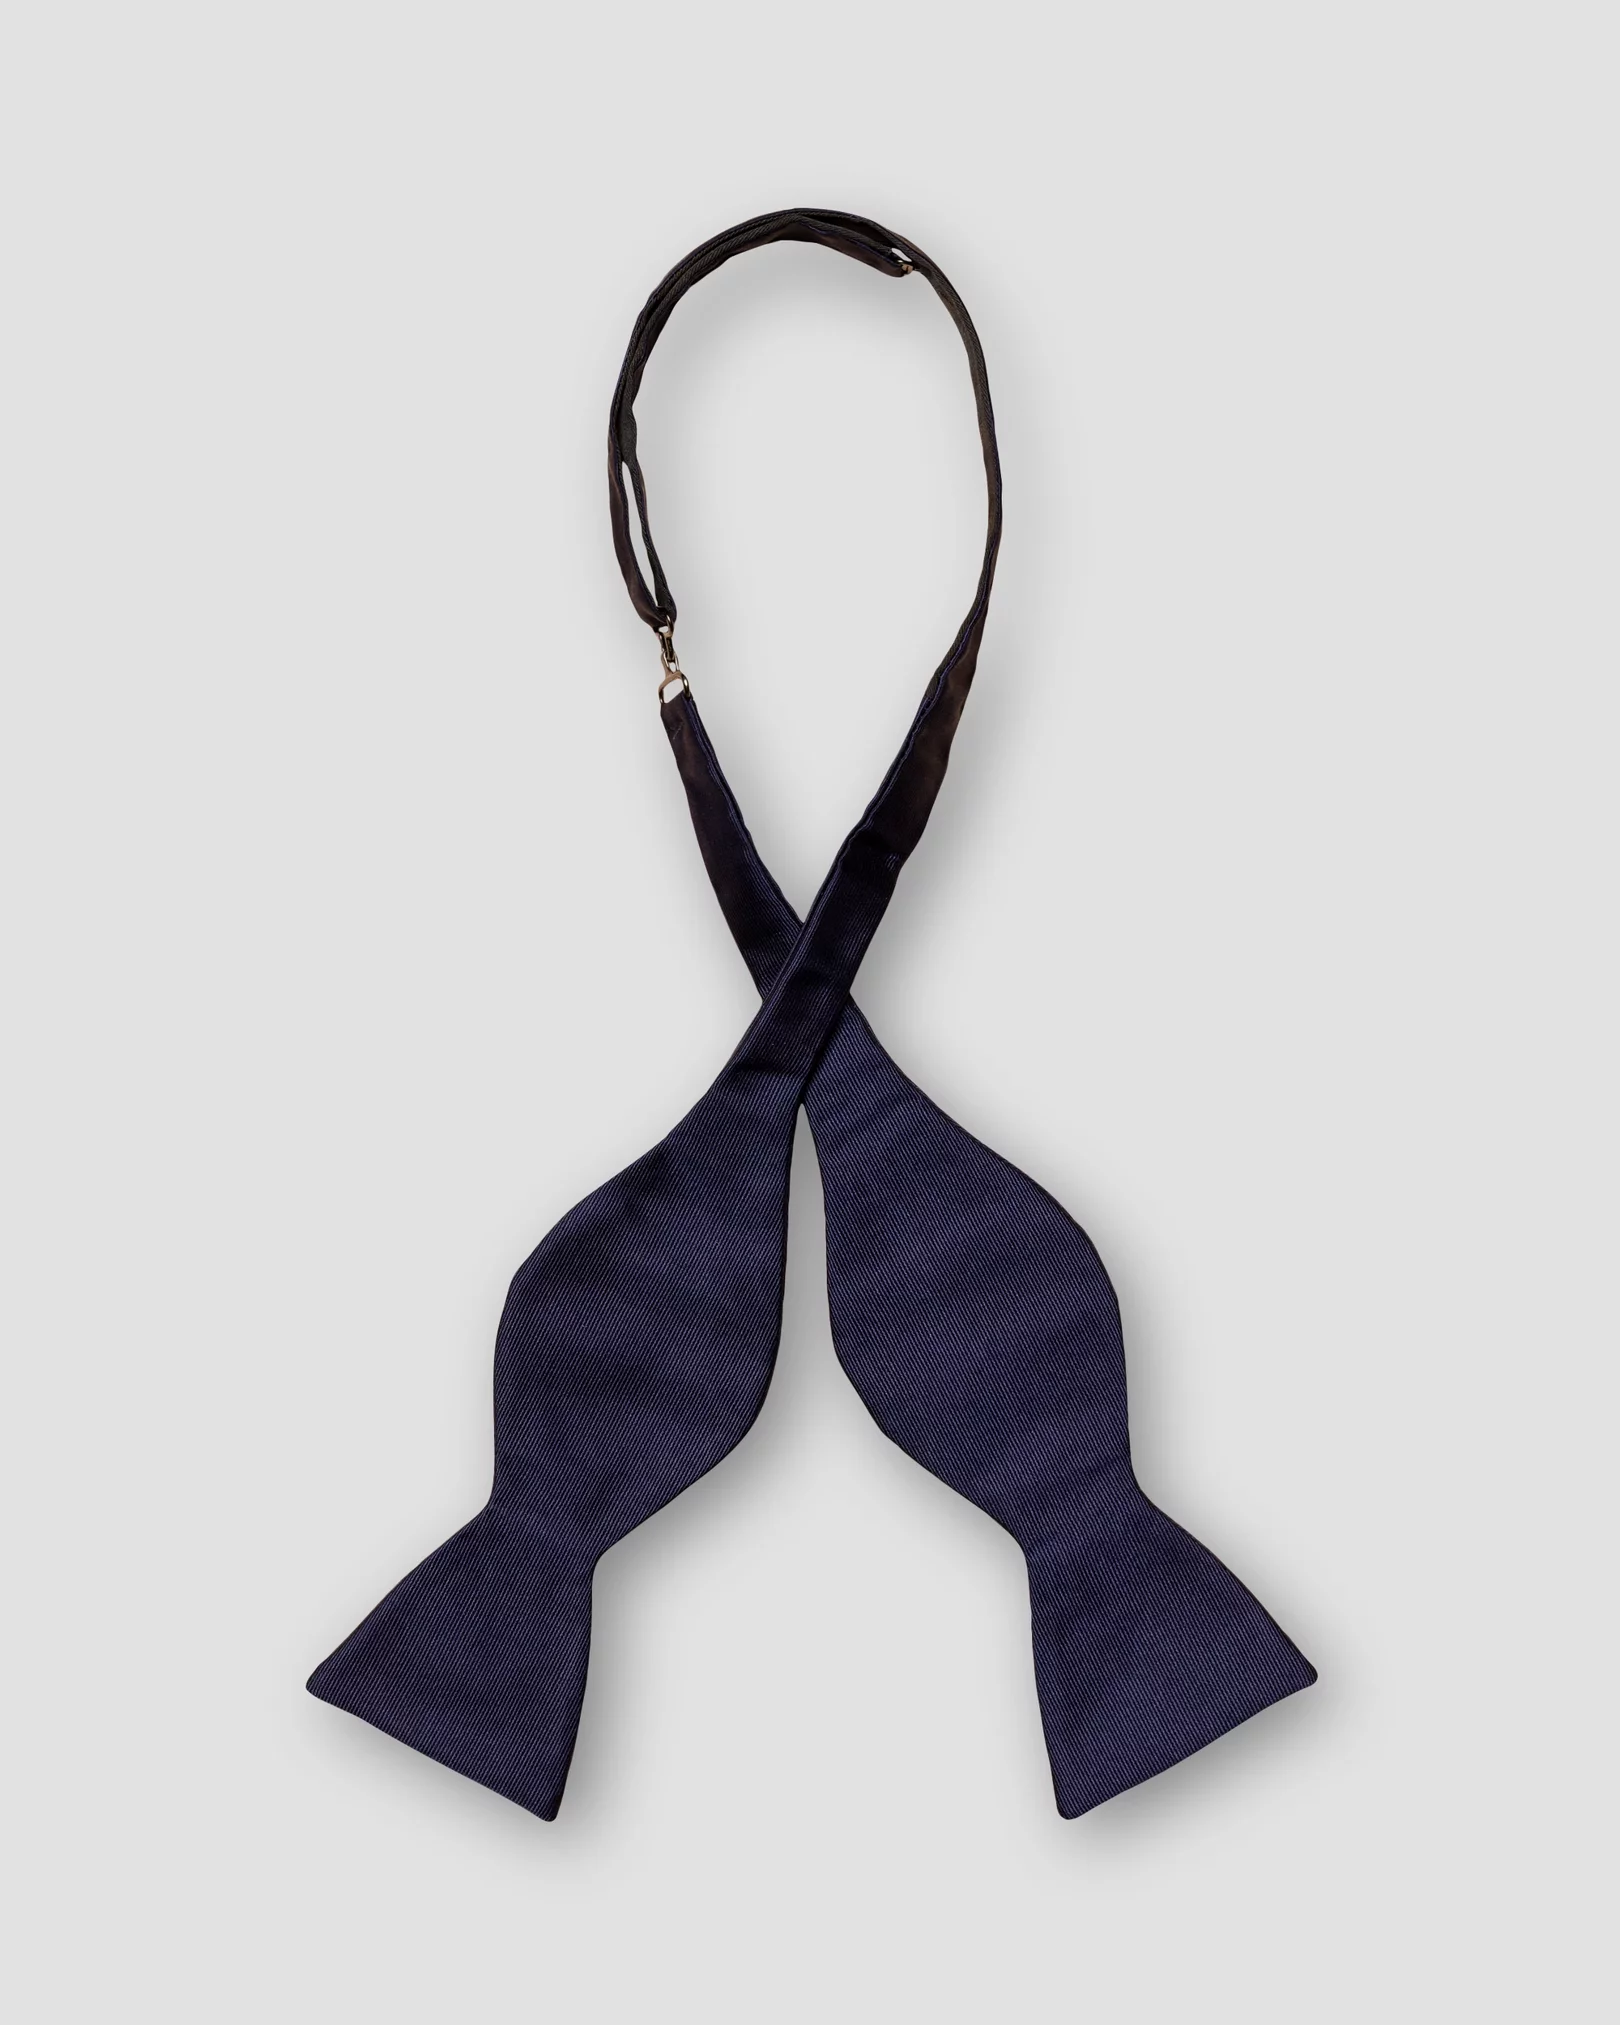 Eton - dark blue bow tie self tied dressed